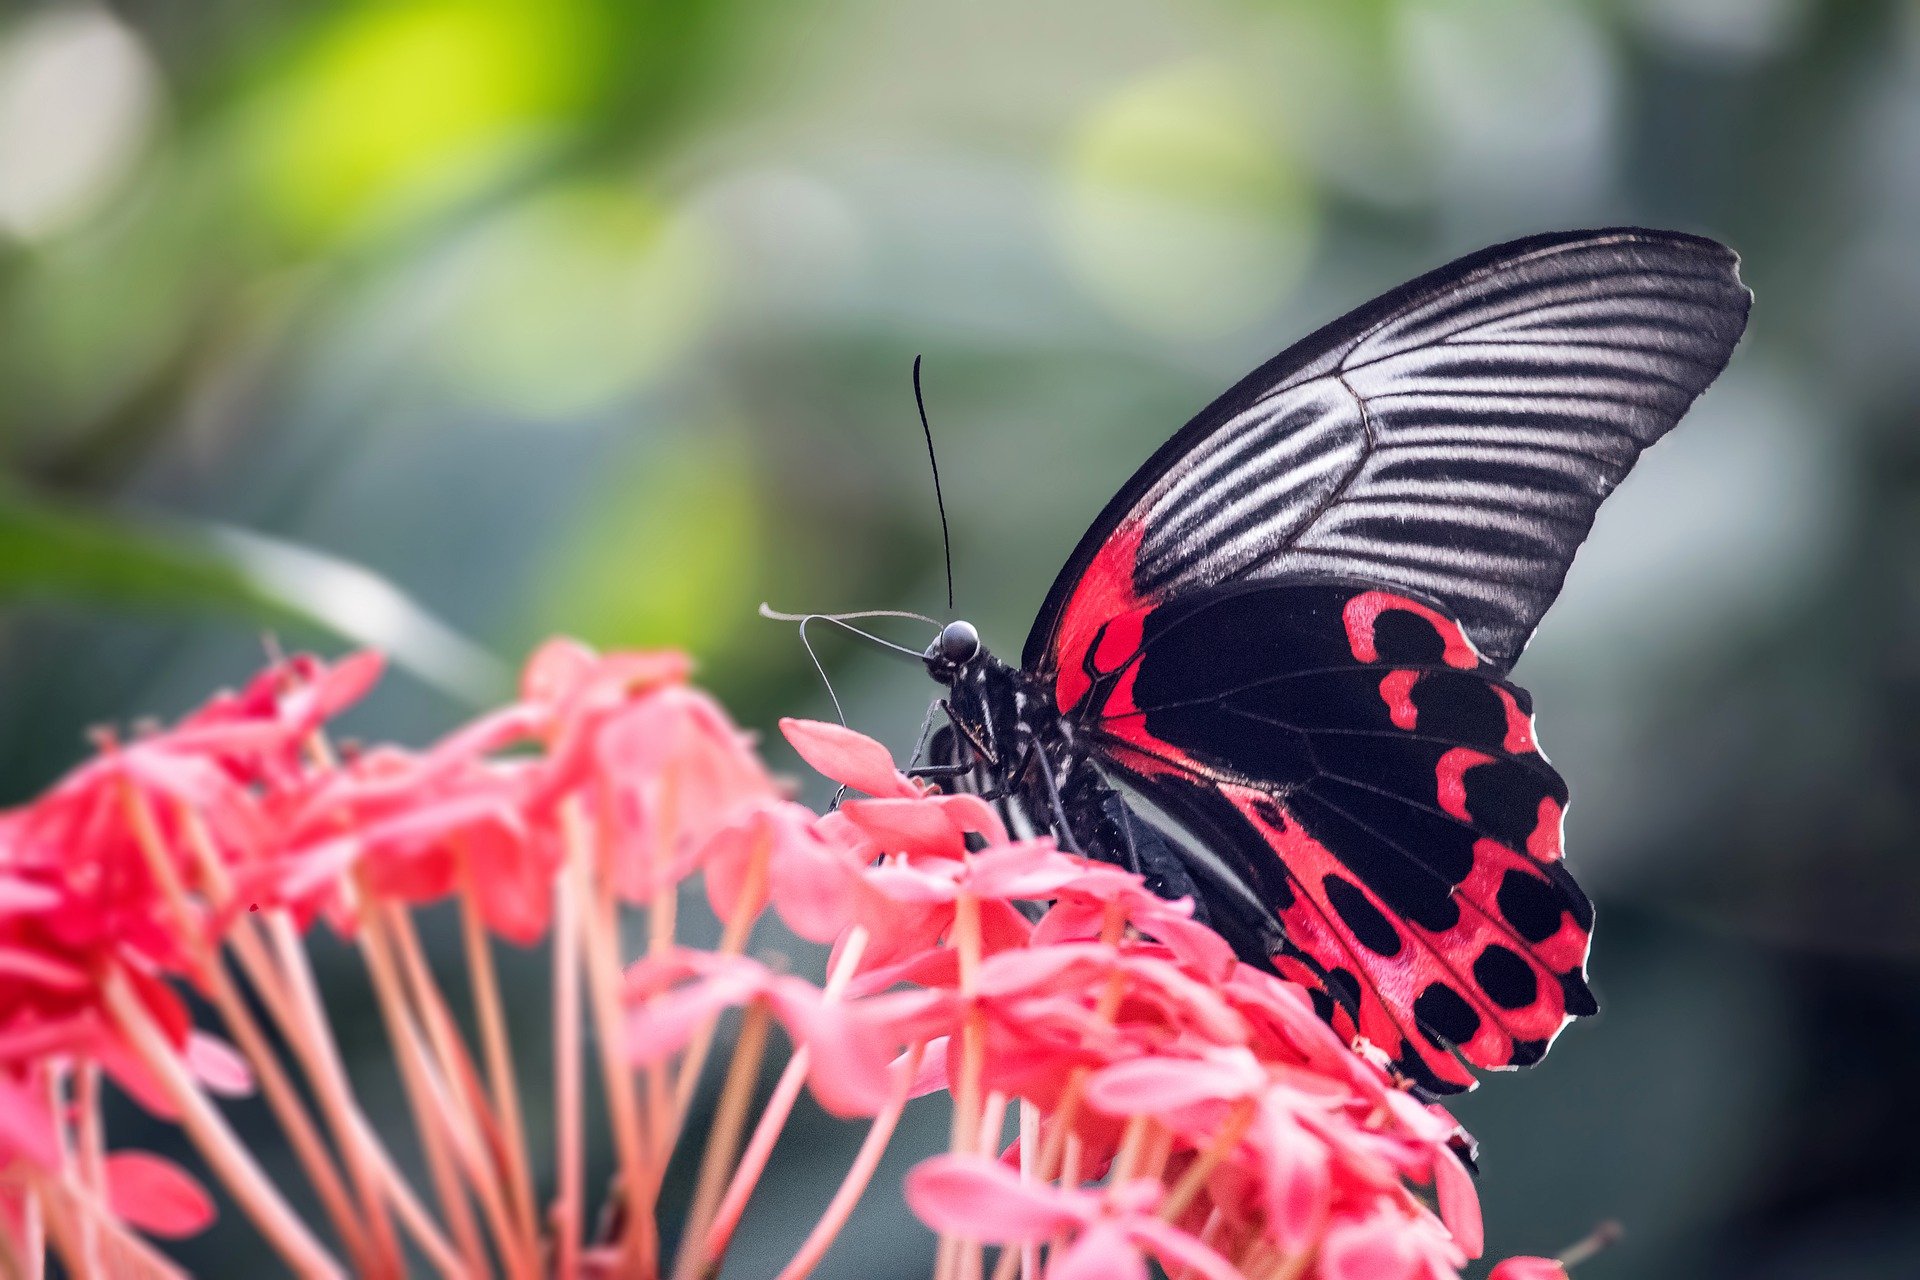 Scarlet-Mormon-butterfly  Papilio rumanzovia